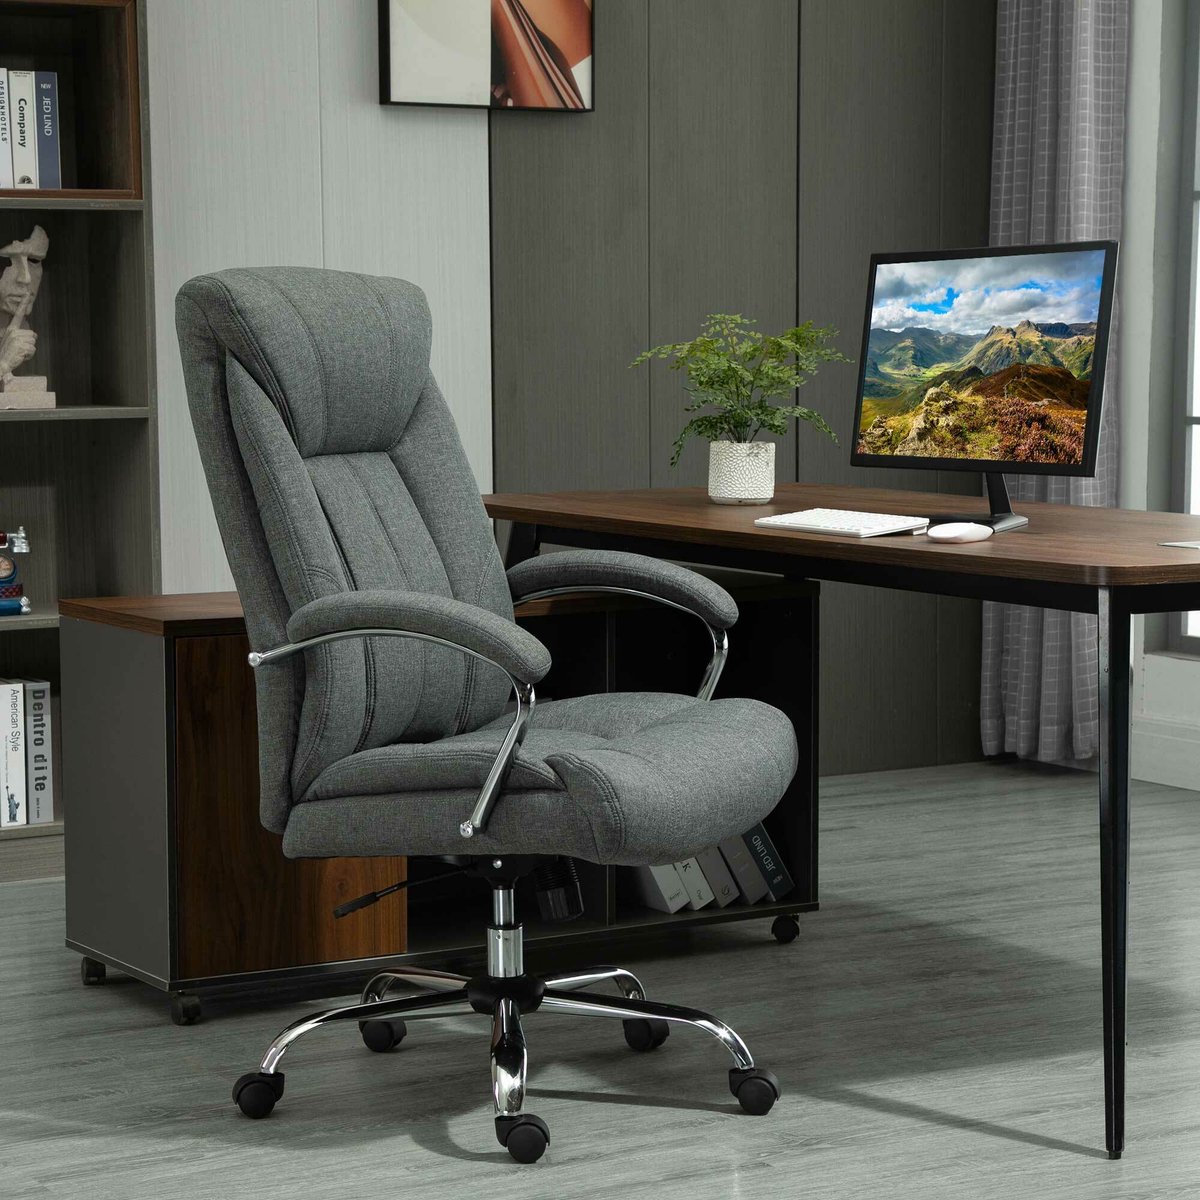 Vinsetto Bureaustoel ergonomisch ontwerp, ademende polyester hoes 921-472V80